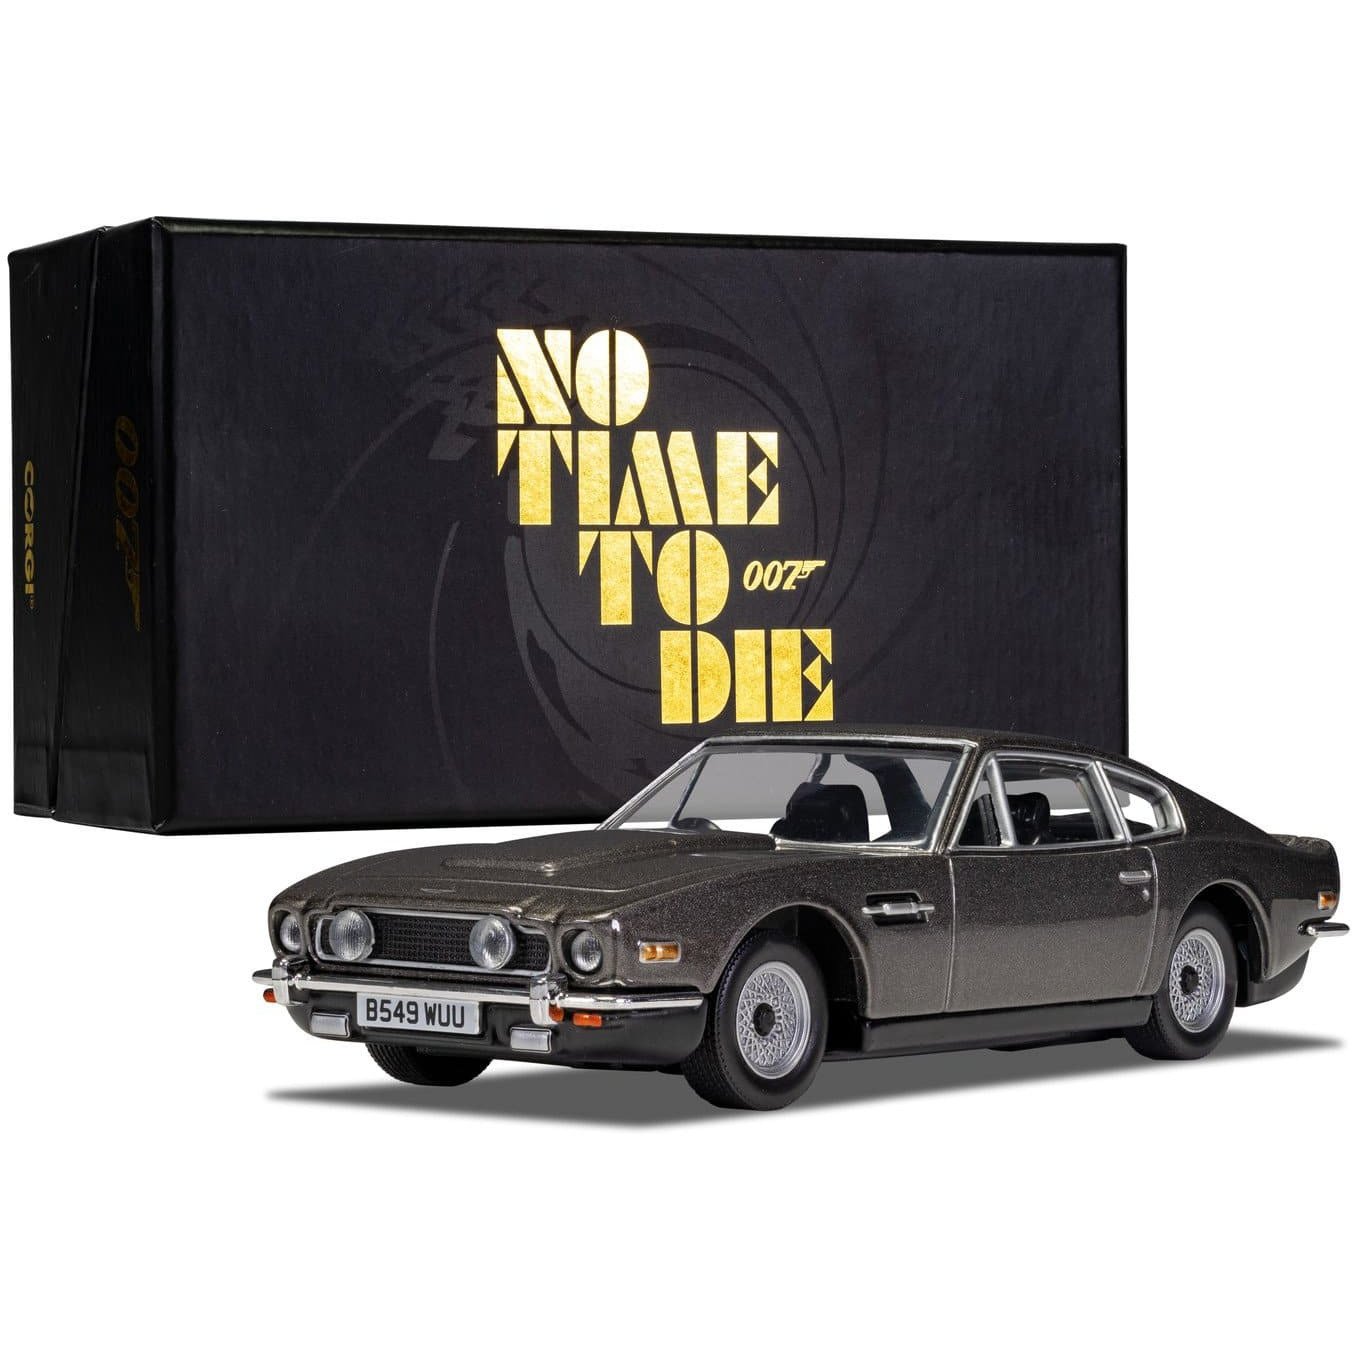 James Bond Aston Martin V8 Model Car - No Time To Die Edition - By Corgi 007Store